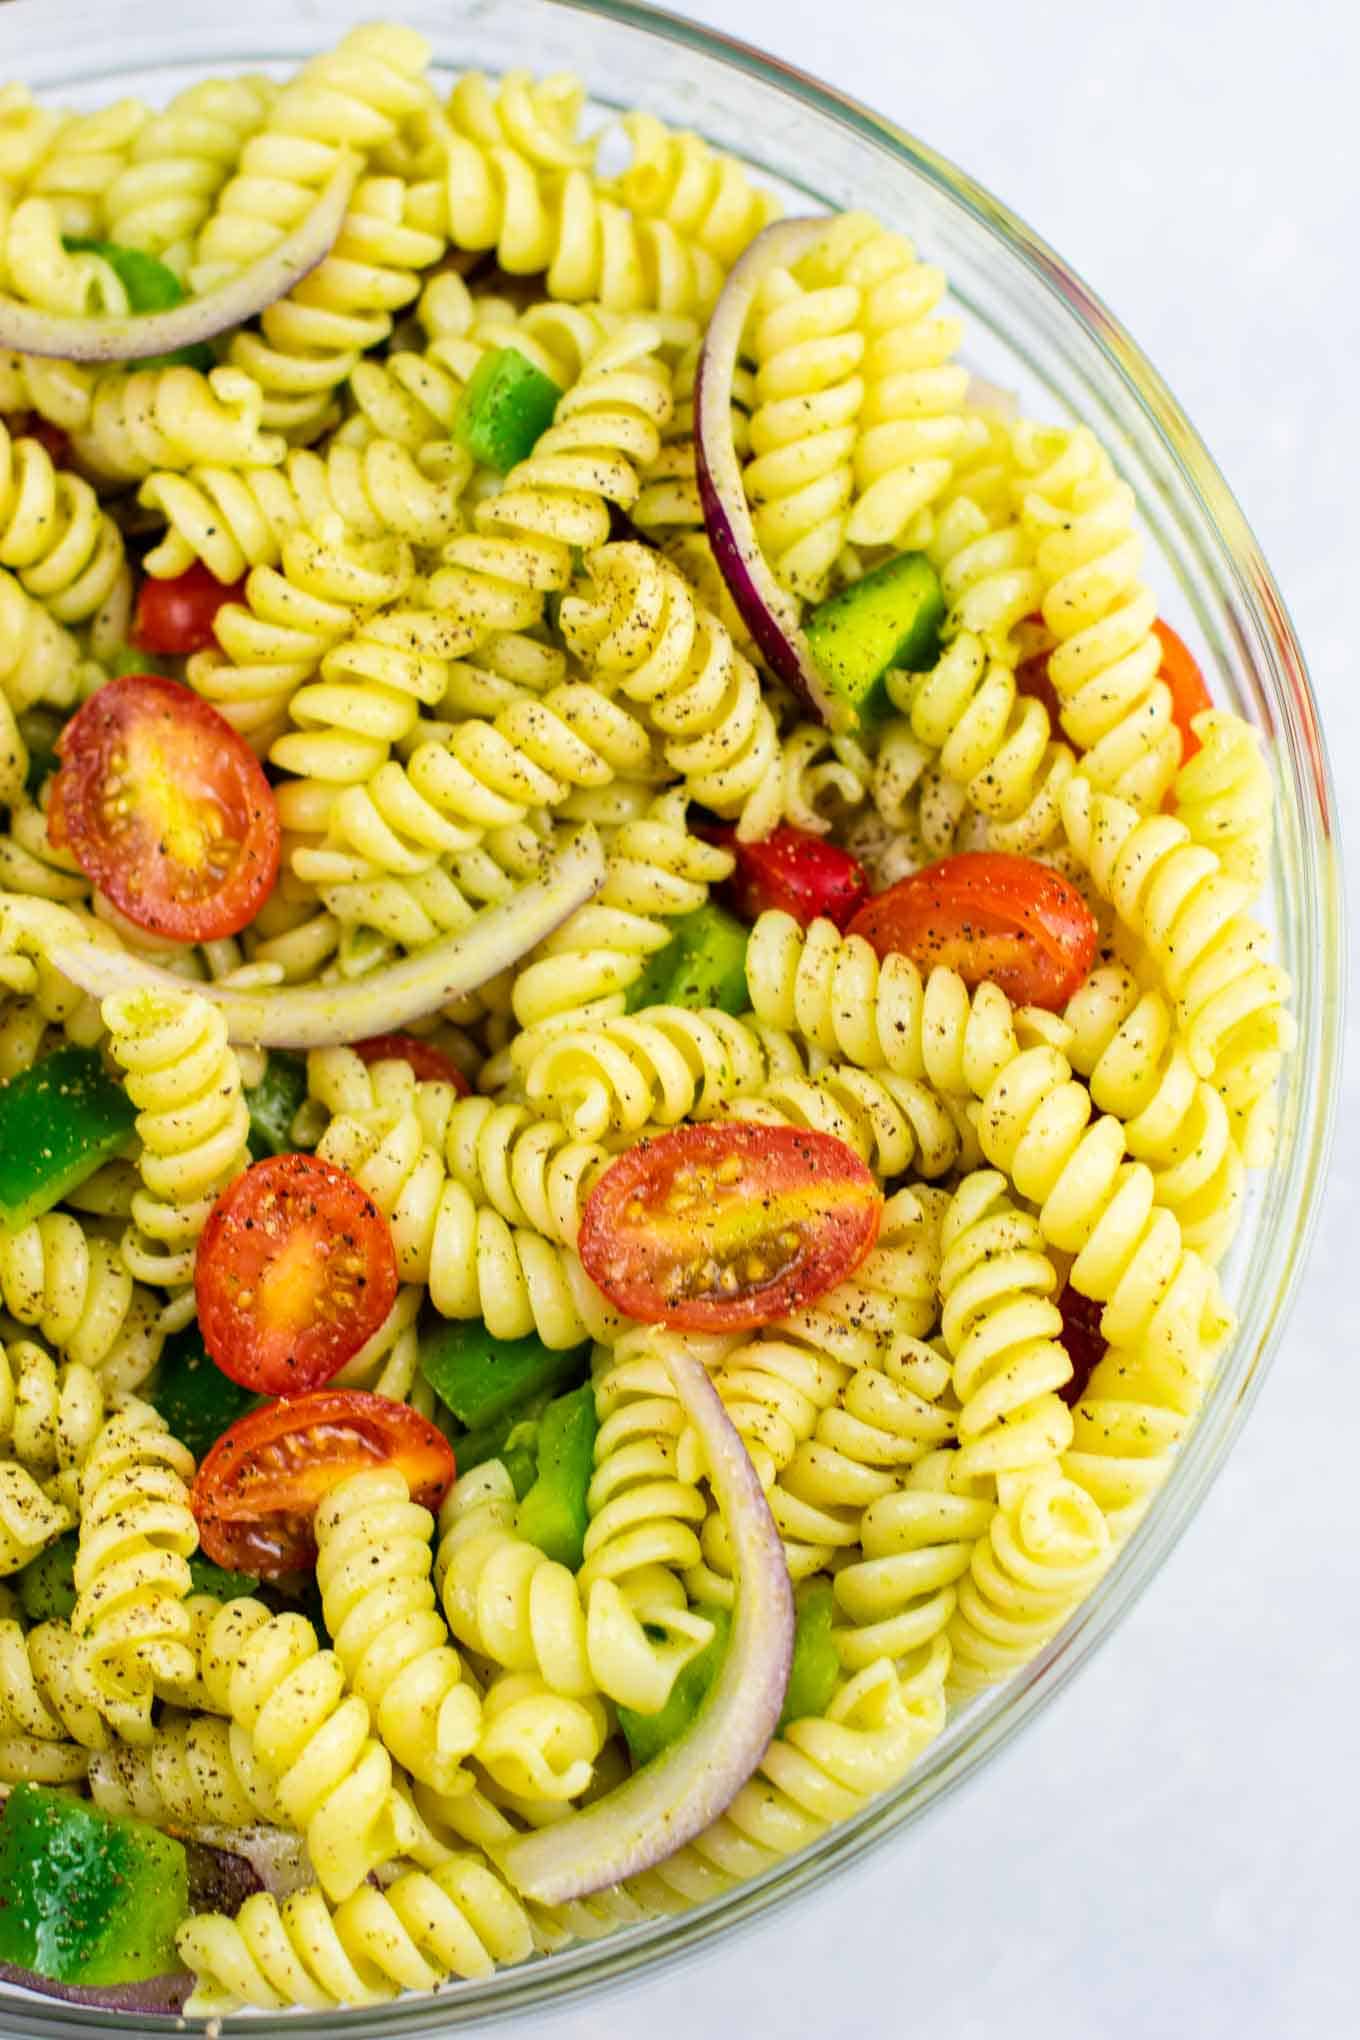 Vegan pasta salad recipes – this was AMAZING! So much flavor and really easy to make. #vegan #pastasalad #vegetarian #sidedish #summer #meatless #dairyfree #healthyrecipe #veganpastasalad